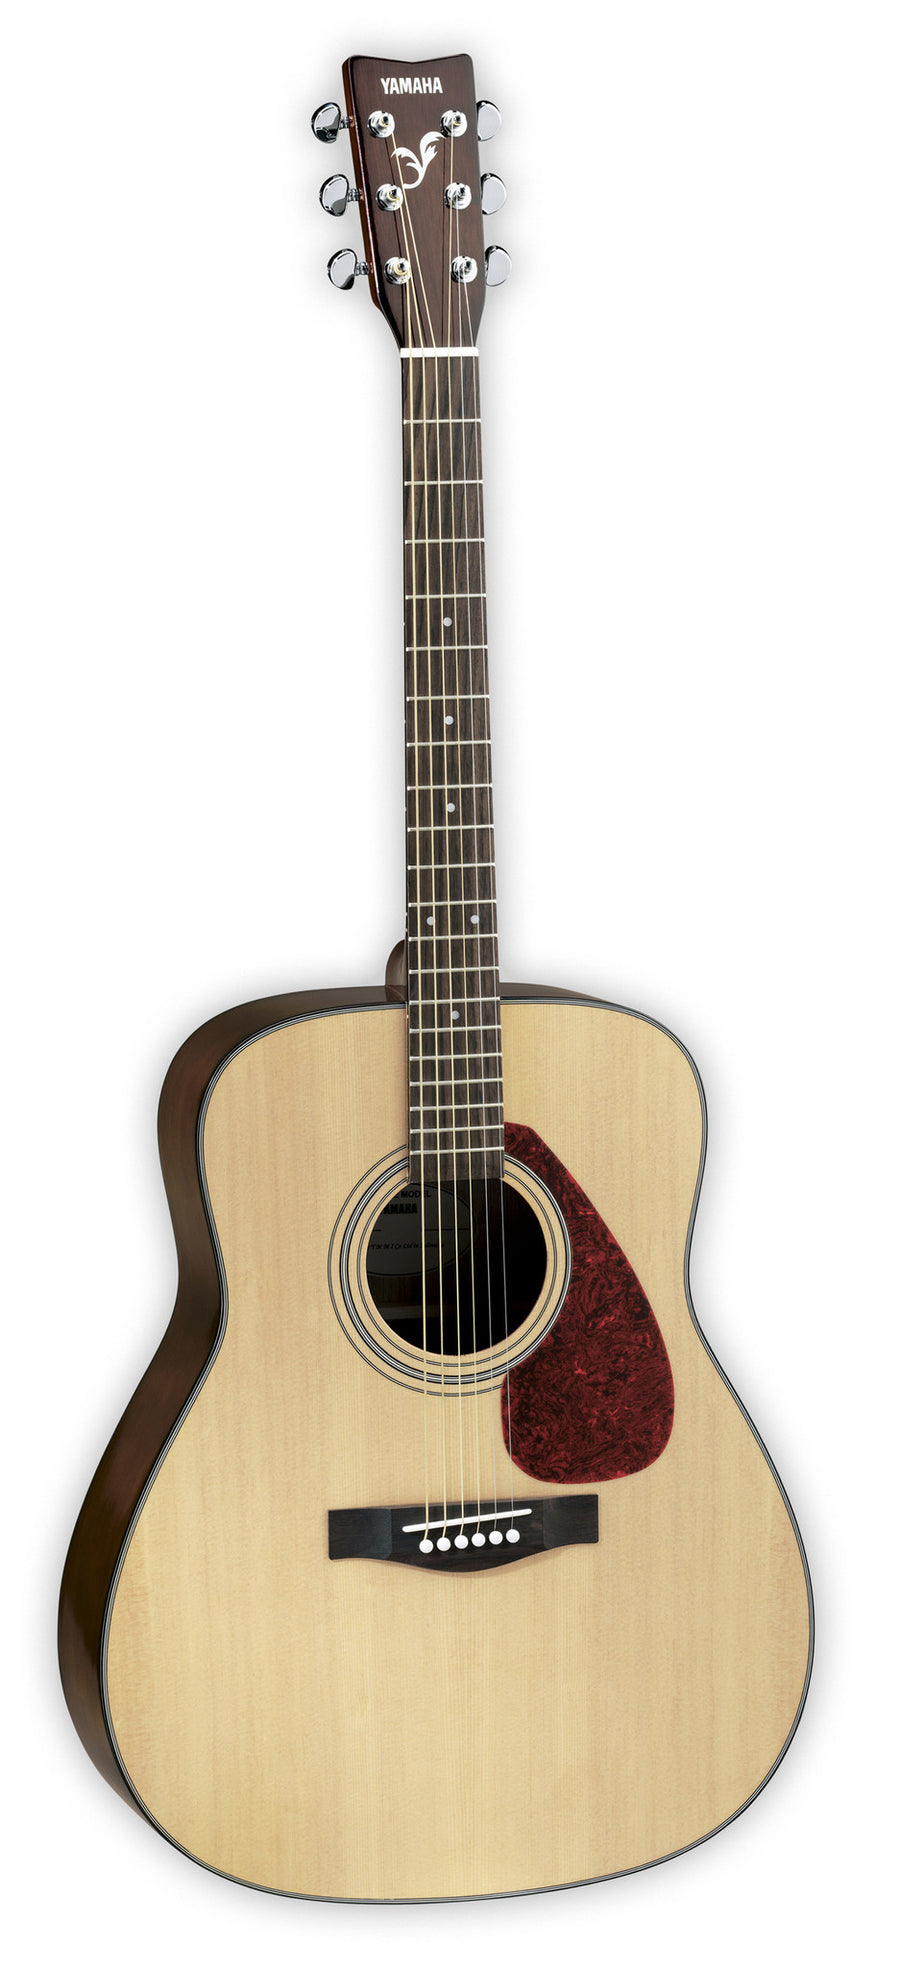 Yamaha FS820 Small Body Acoustic Guitar Yamaha Acoustic Guitar